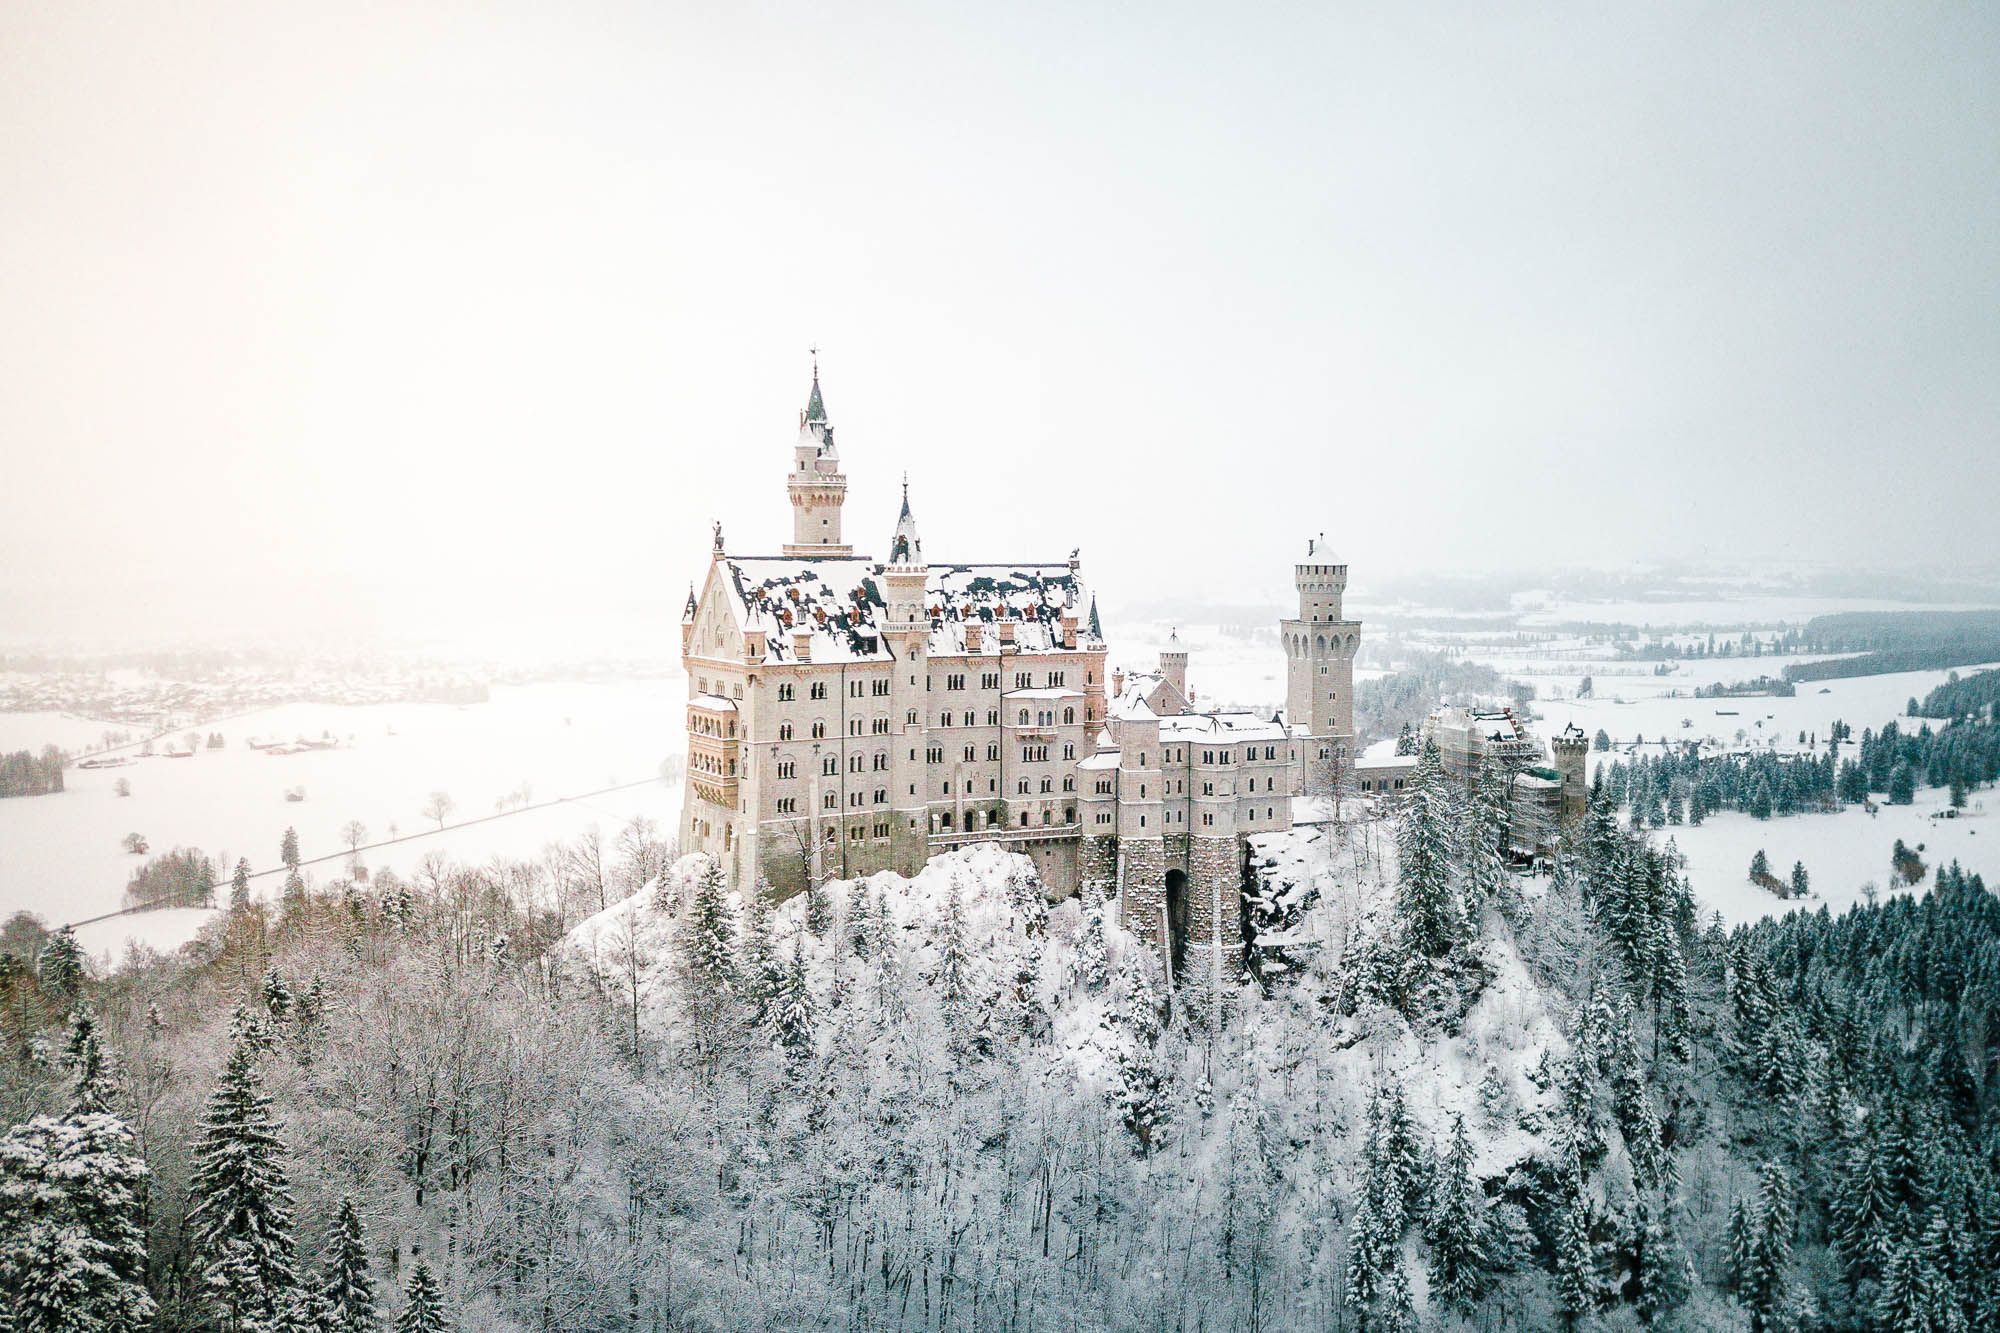 Neuschwanstein Castle in the snow in winter from mary's bridge Marienbrucke lookout best spot to photograph german fairytale castle